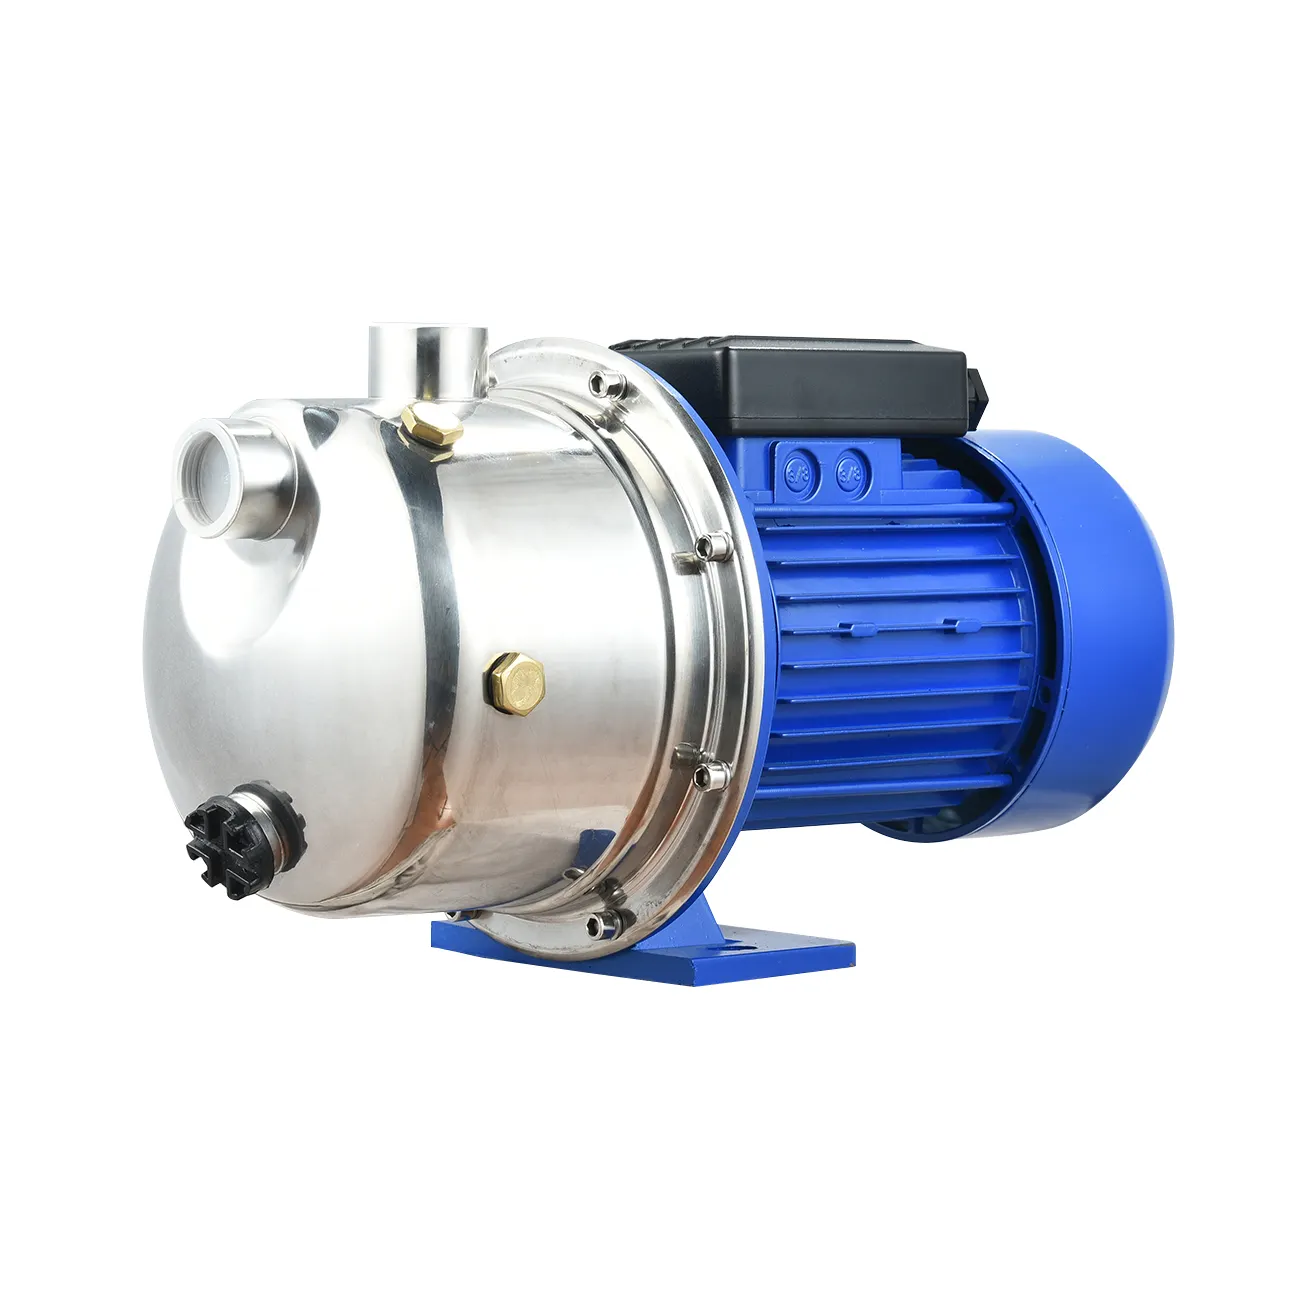 Julante JS 80 series 0.75hp 550w 220v smart stainless steel pump self priming pump jet pump